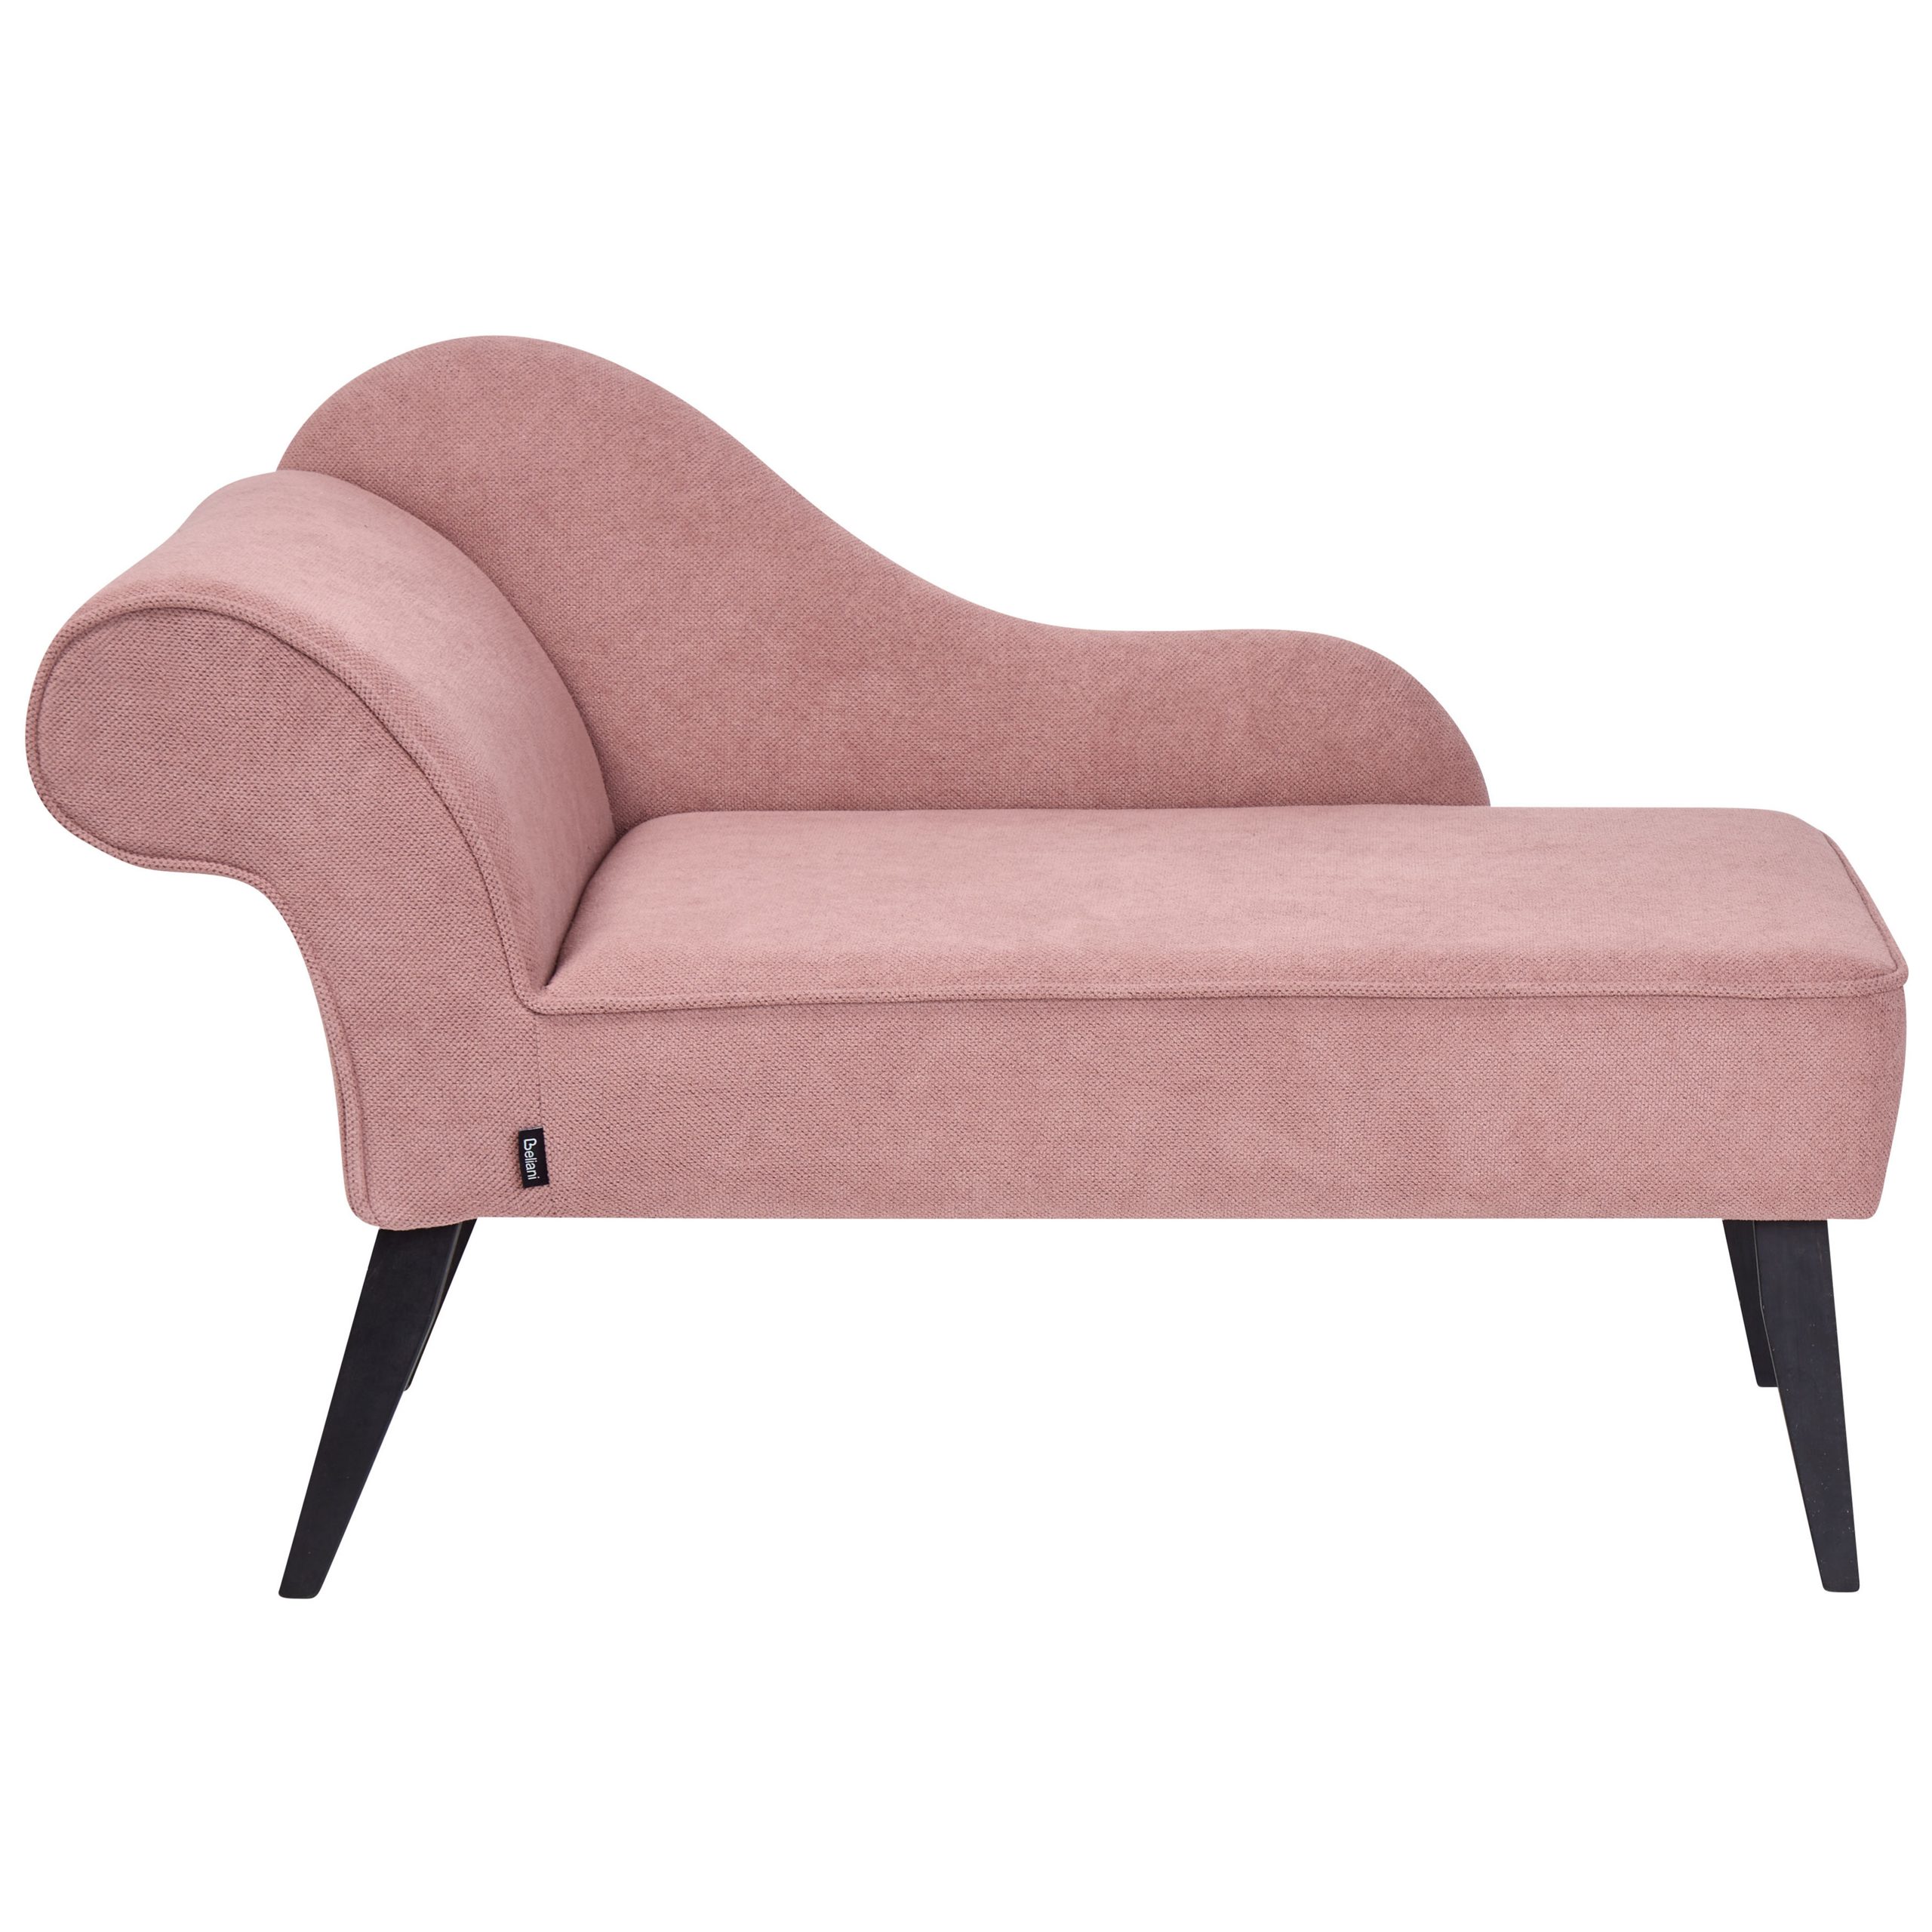 BELIANI Chaise longue stof roze linkszijdig BIARRITZ